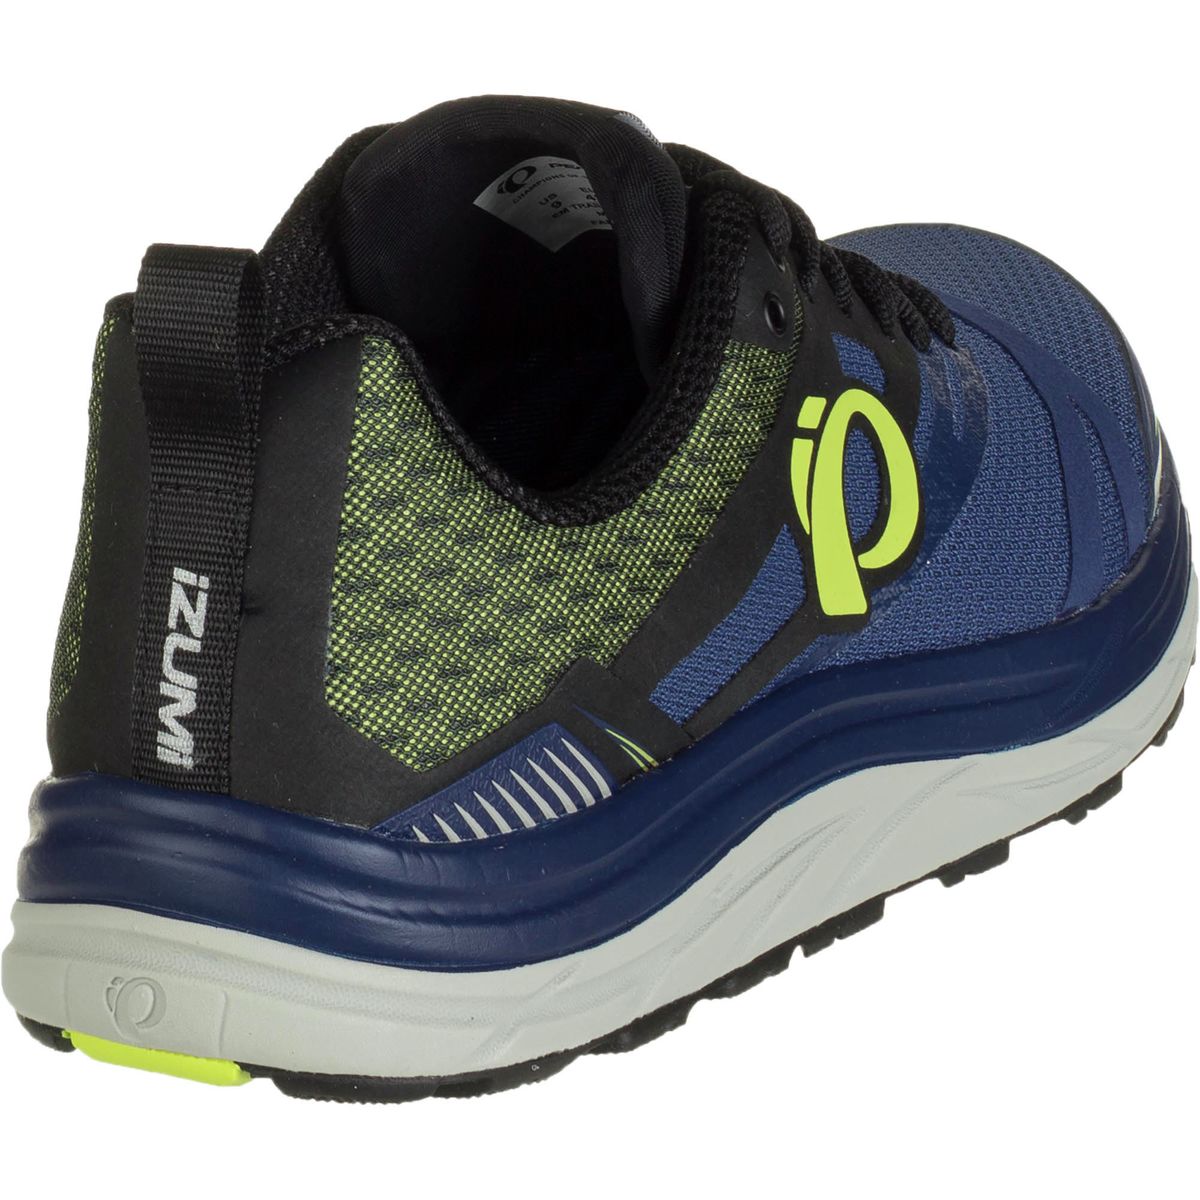 PEARL iZUMi EM Trail N3 Running Shoe - Men's - Footwear